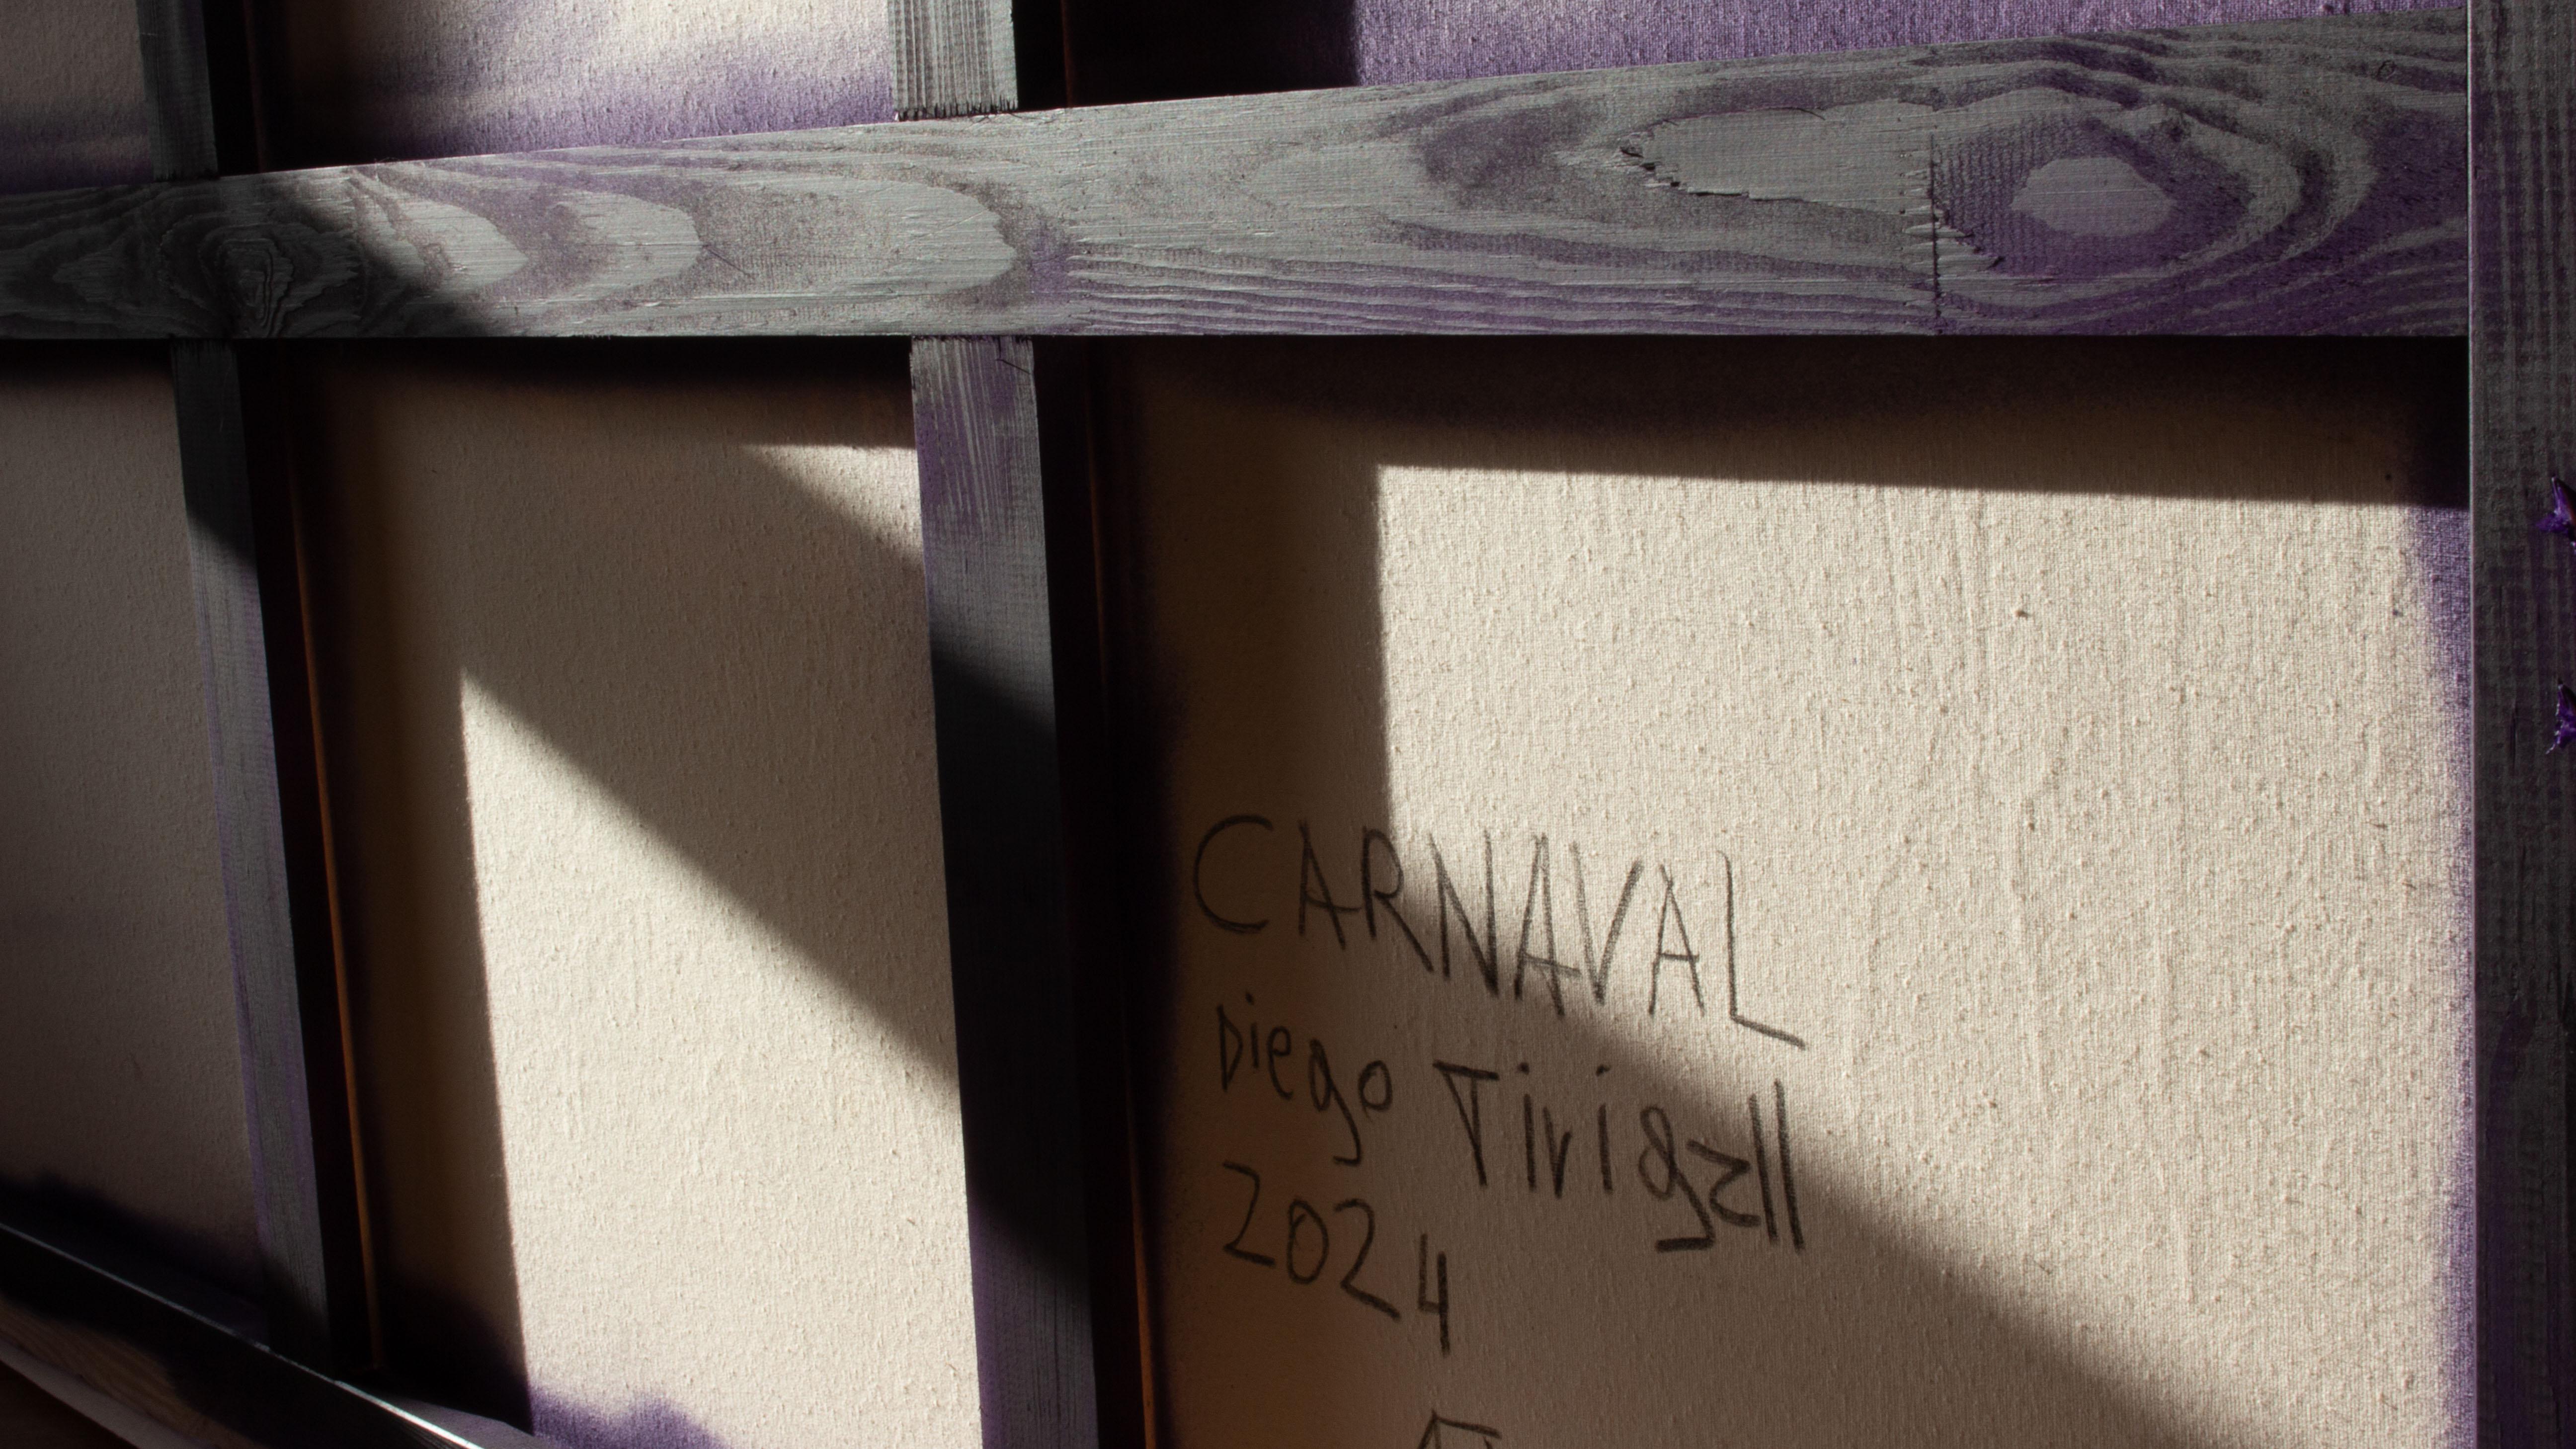 Carnaval Kawaii For Sale 1